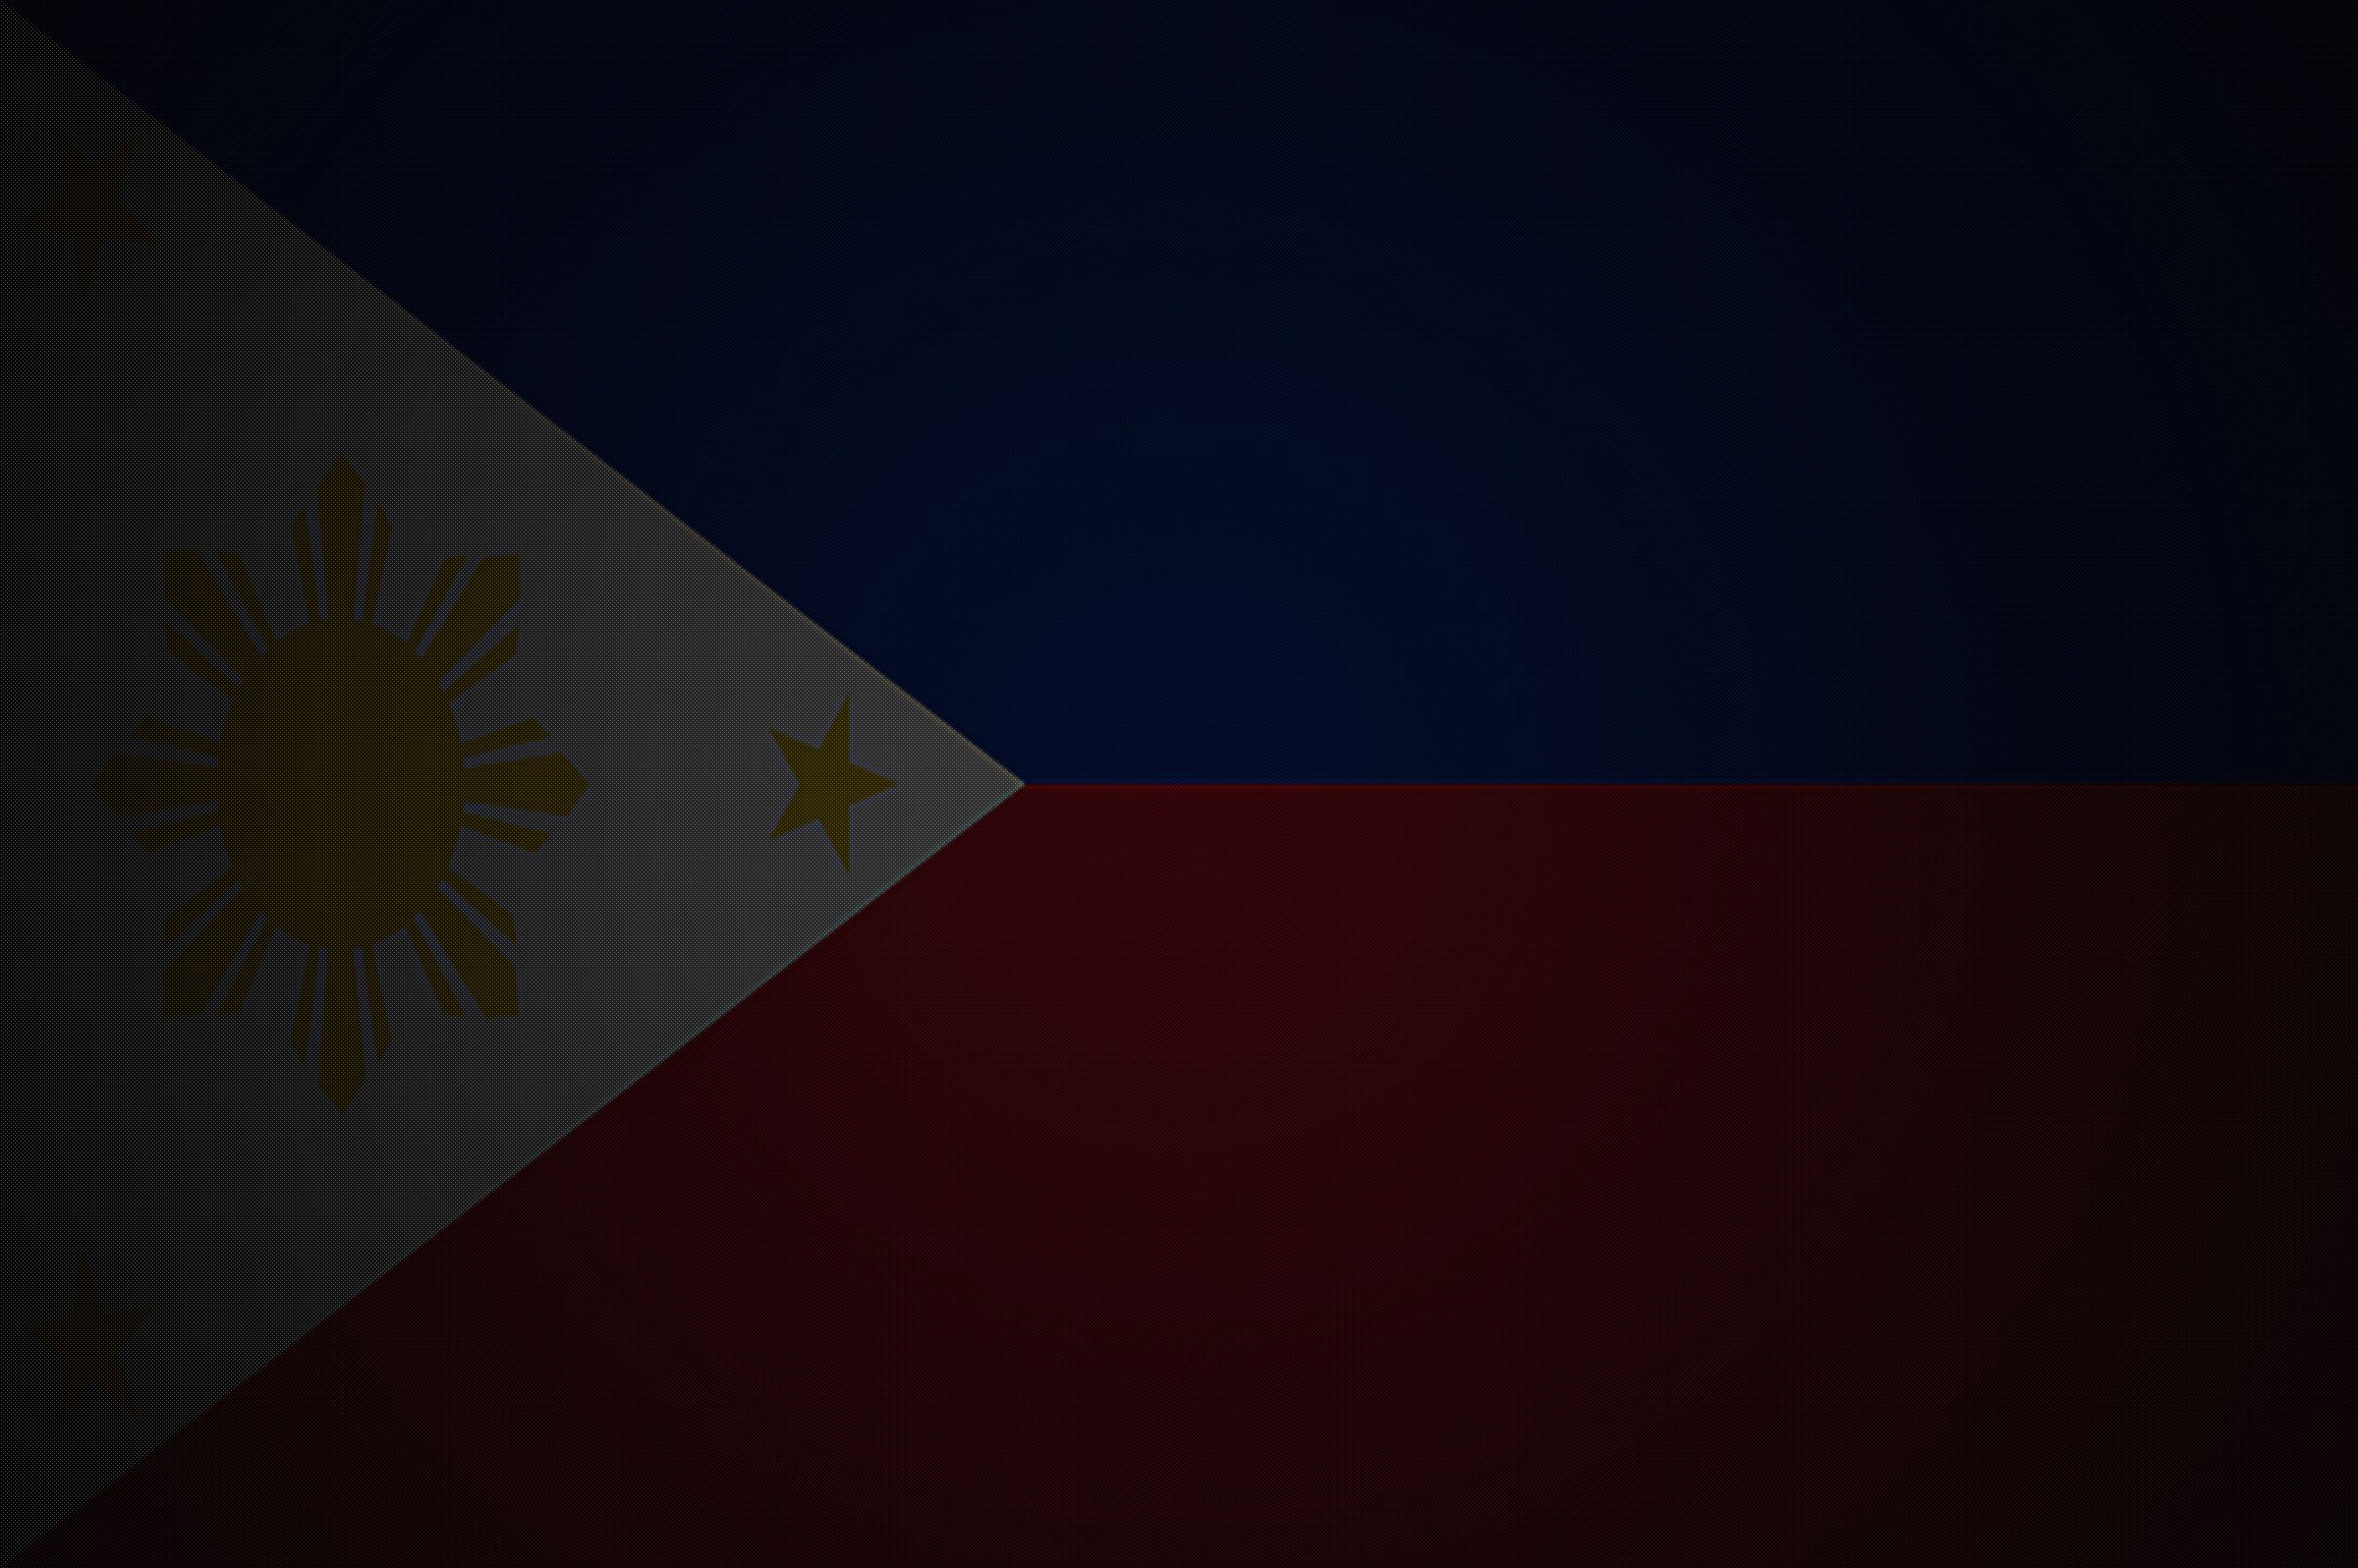 Philippines dark flags share wallpaper. PC